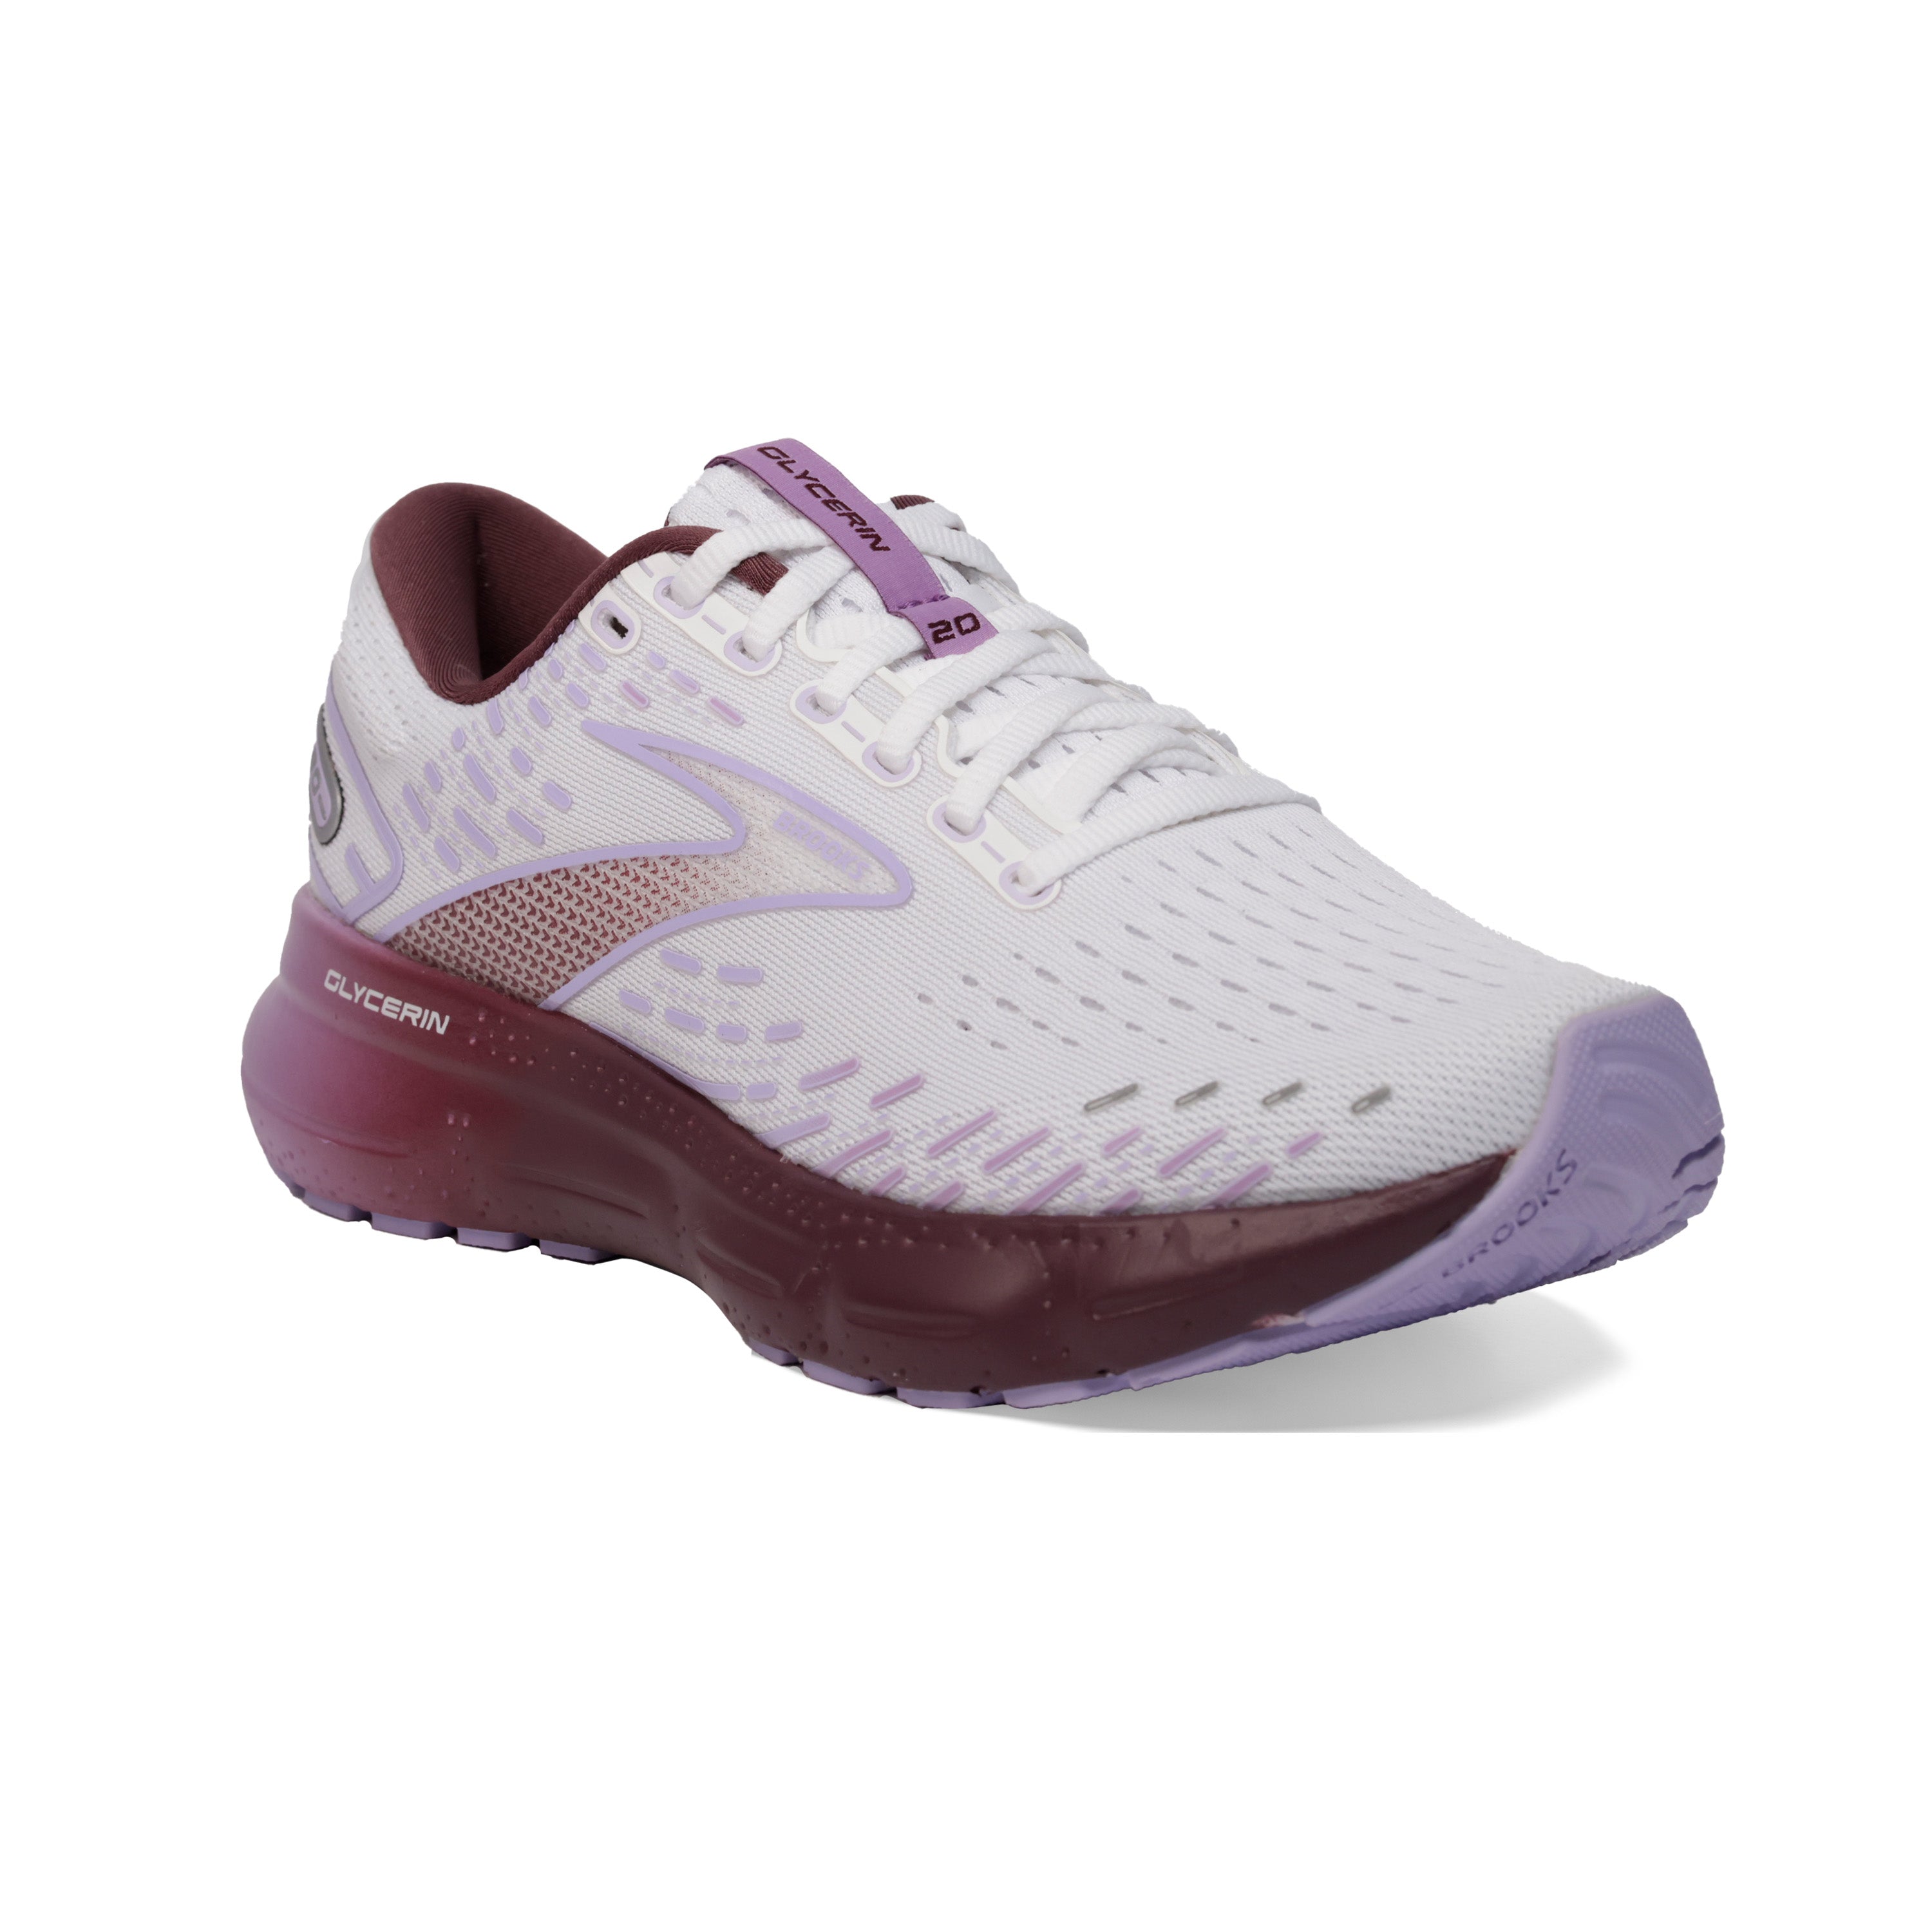 Glycerin 20 - Women's Road Running Shoes